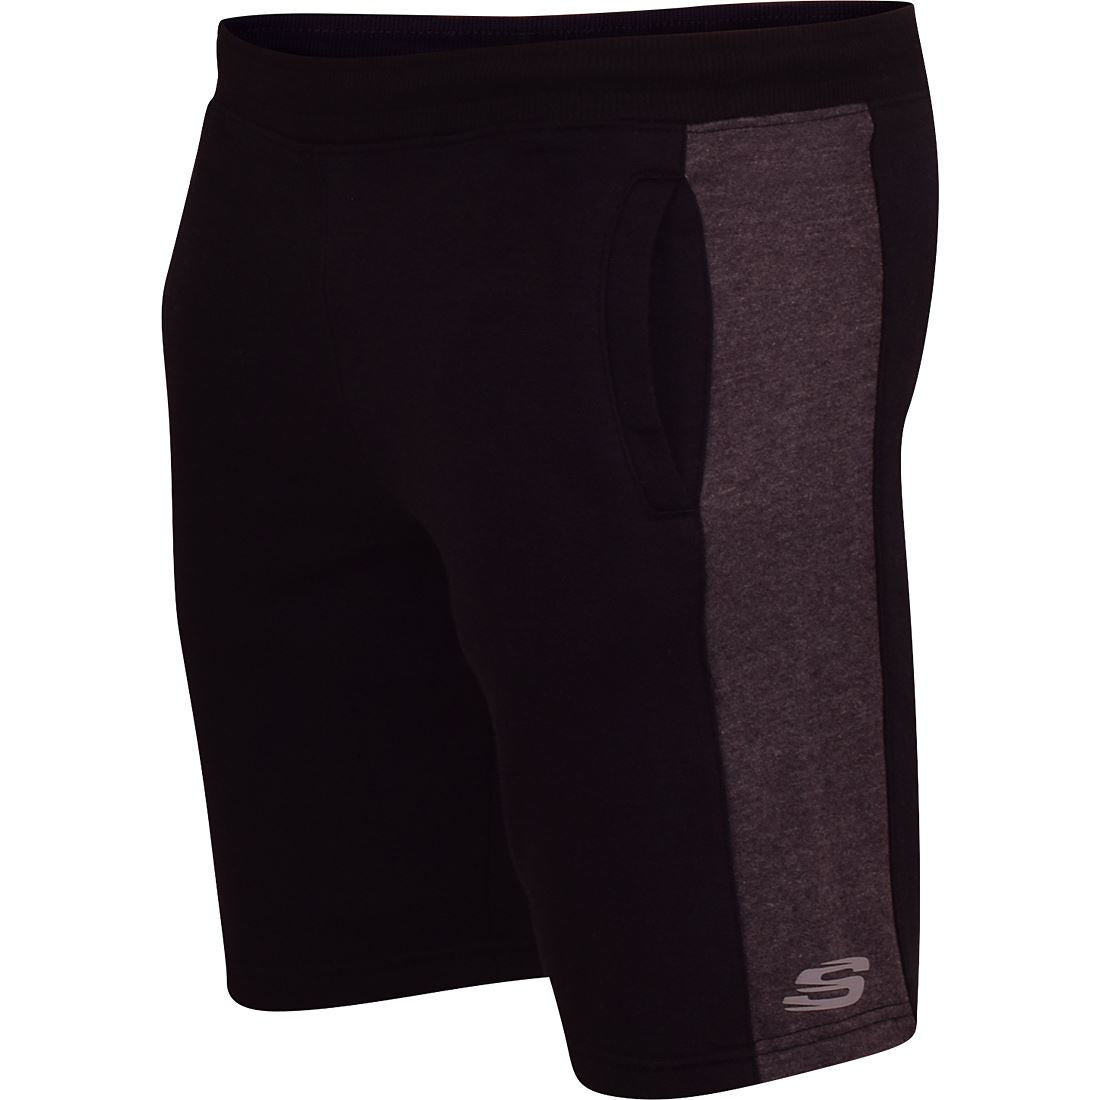 Skechers Original Mens Fleece Shorts Elasticated Waist Summer Jogging Shorts Sports Training Lounge Fitness